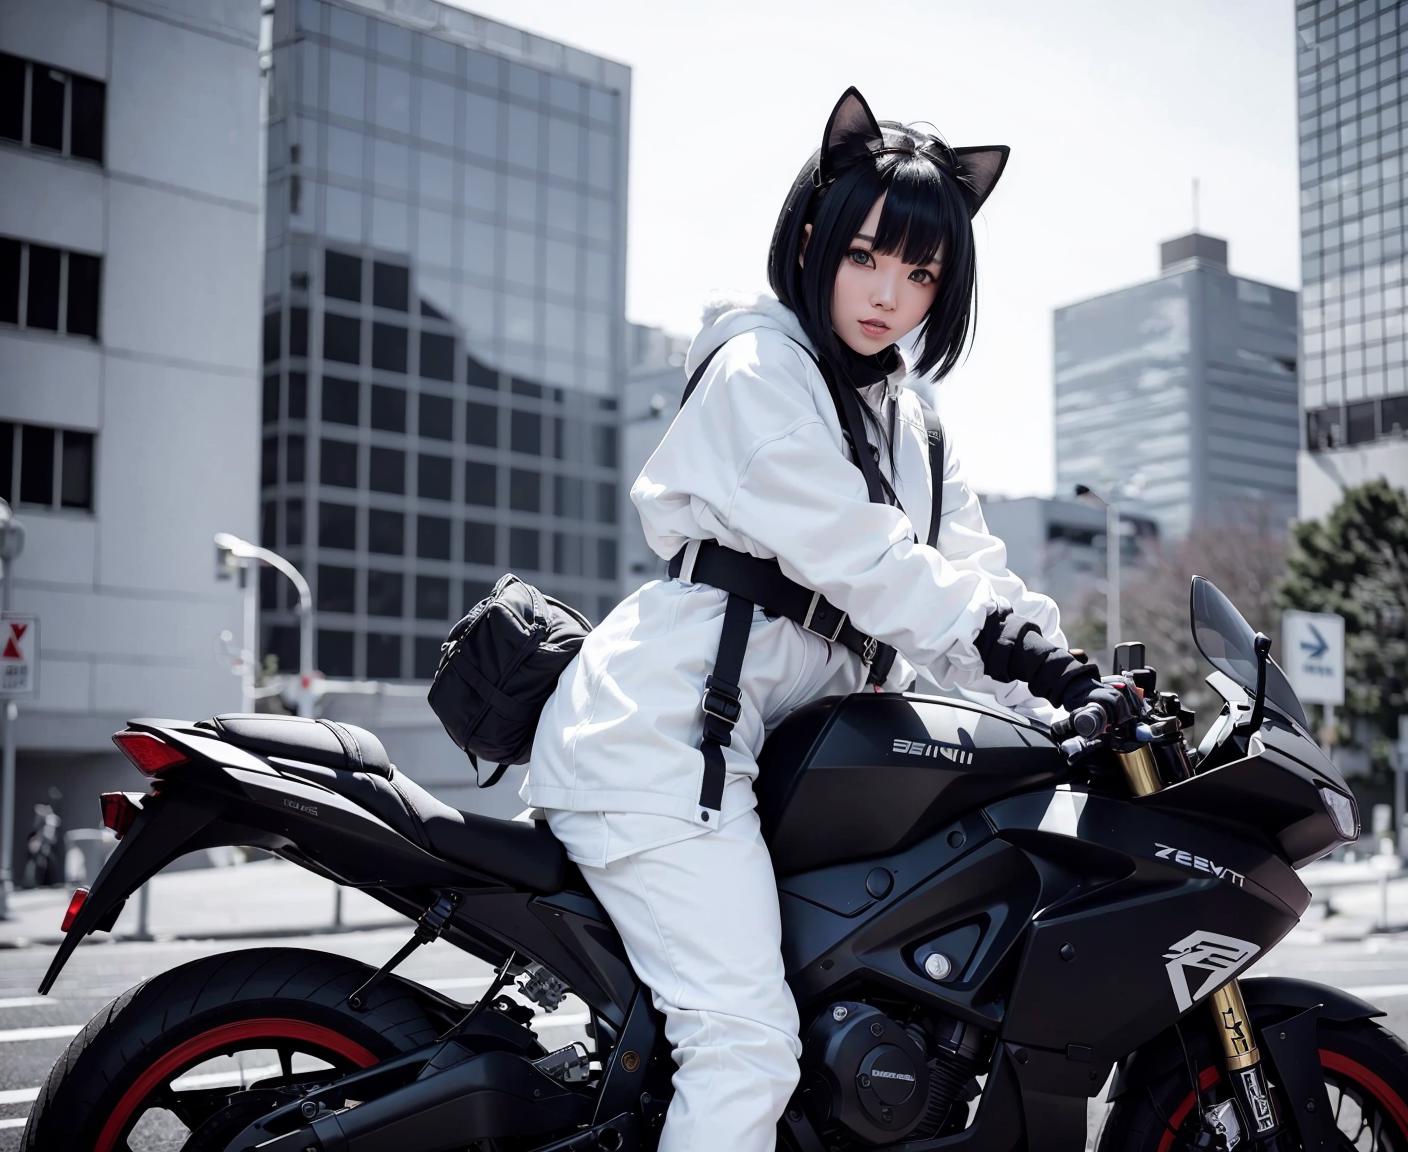 Motorbike EX | Transportation LoRA image by Younite